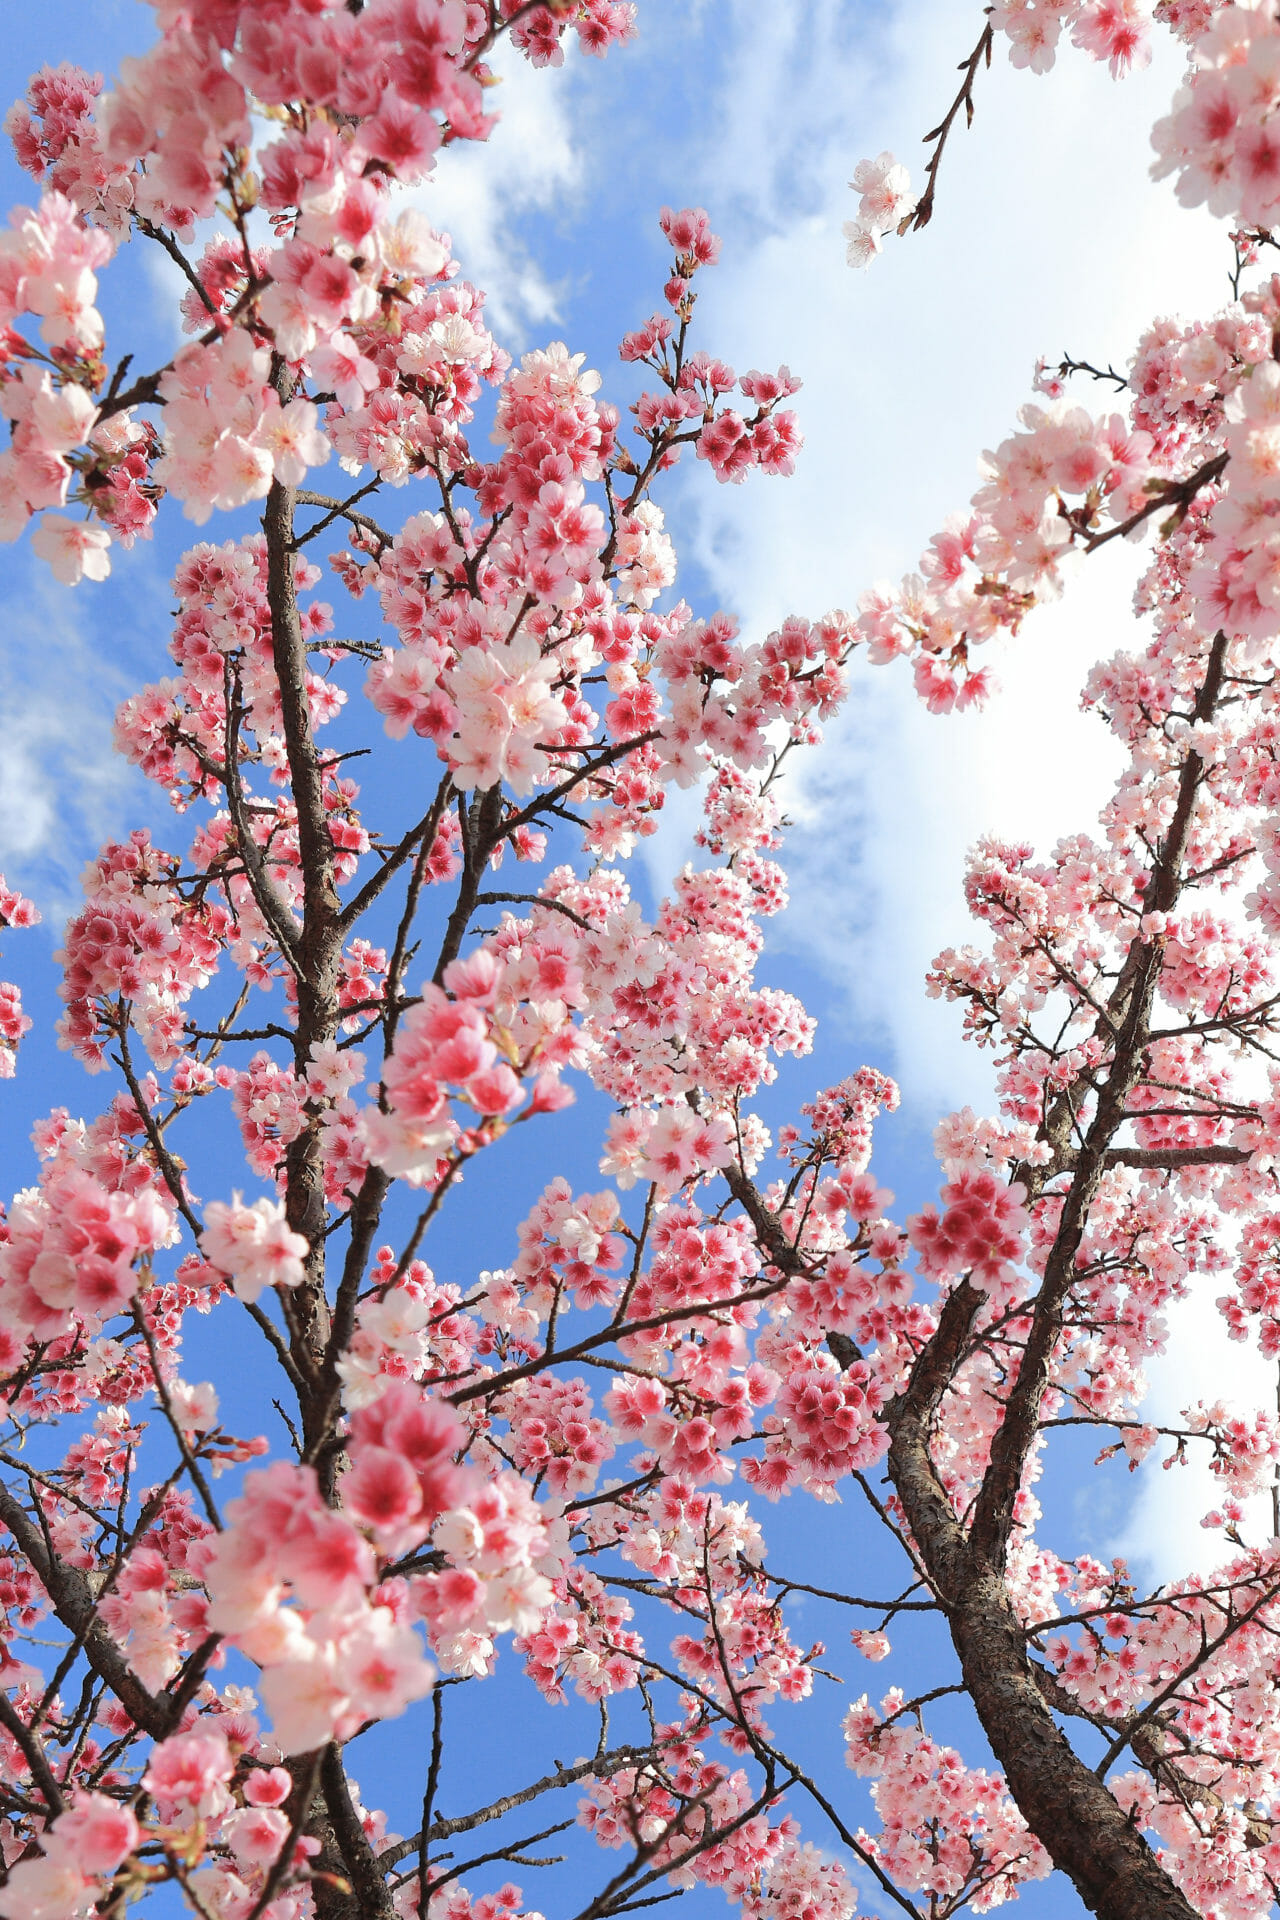 https://www.thetutuguru.com.au/wp-content/uploads/2022/07/Hello-Hello-Plants-Prunus-yoshino-cherry-blossom-in-spring-pink-blossoms.jpg